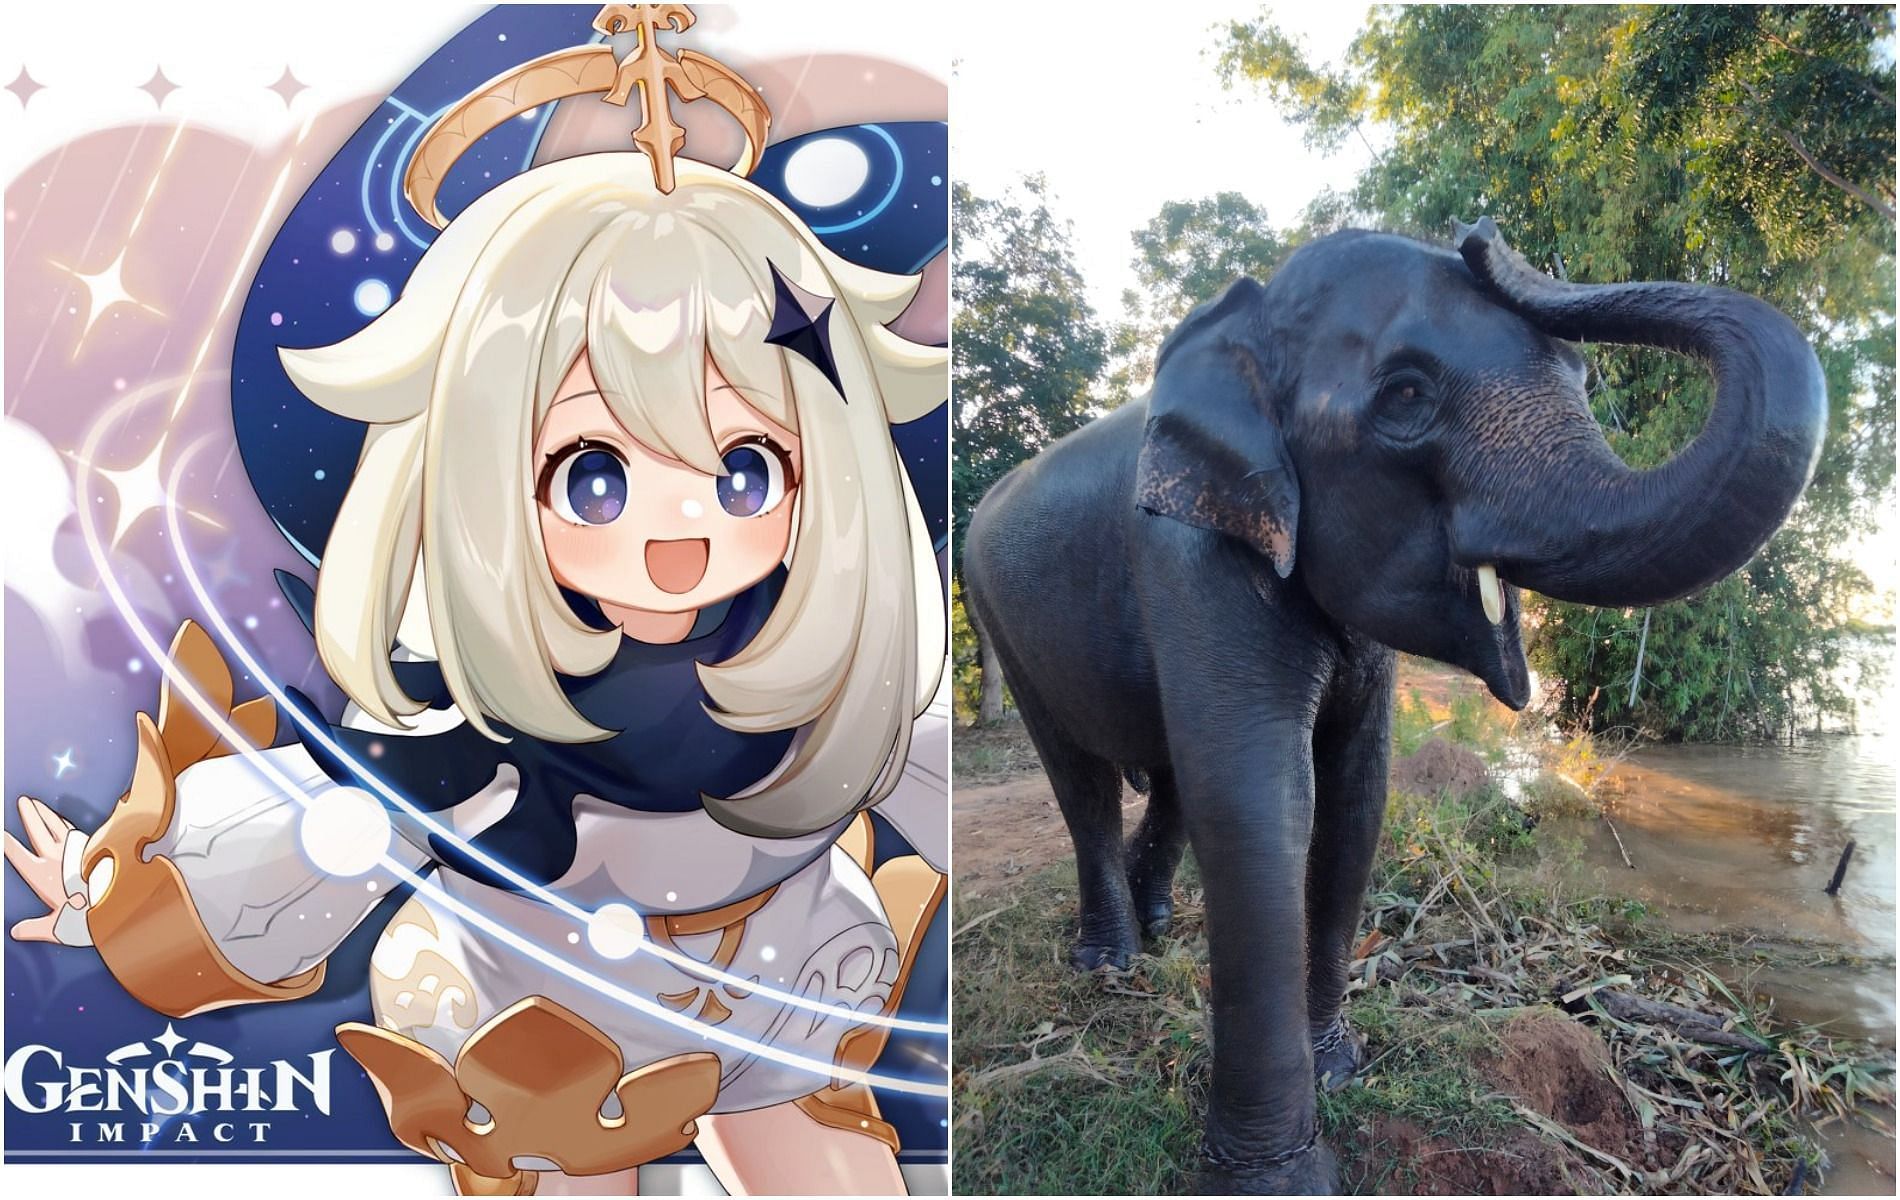 Genshin Impact community discusses elephant abuse in Thai circus rings (Images via Genshin Impact and thanawut_zaza Twitter handle)